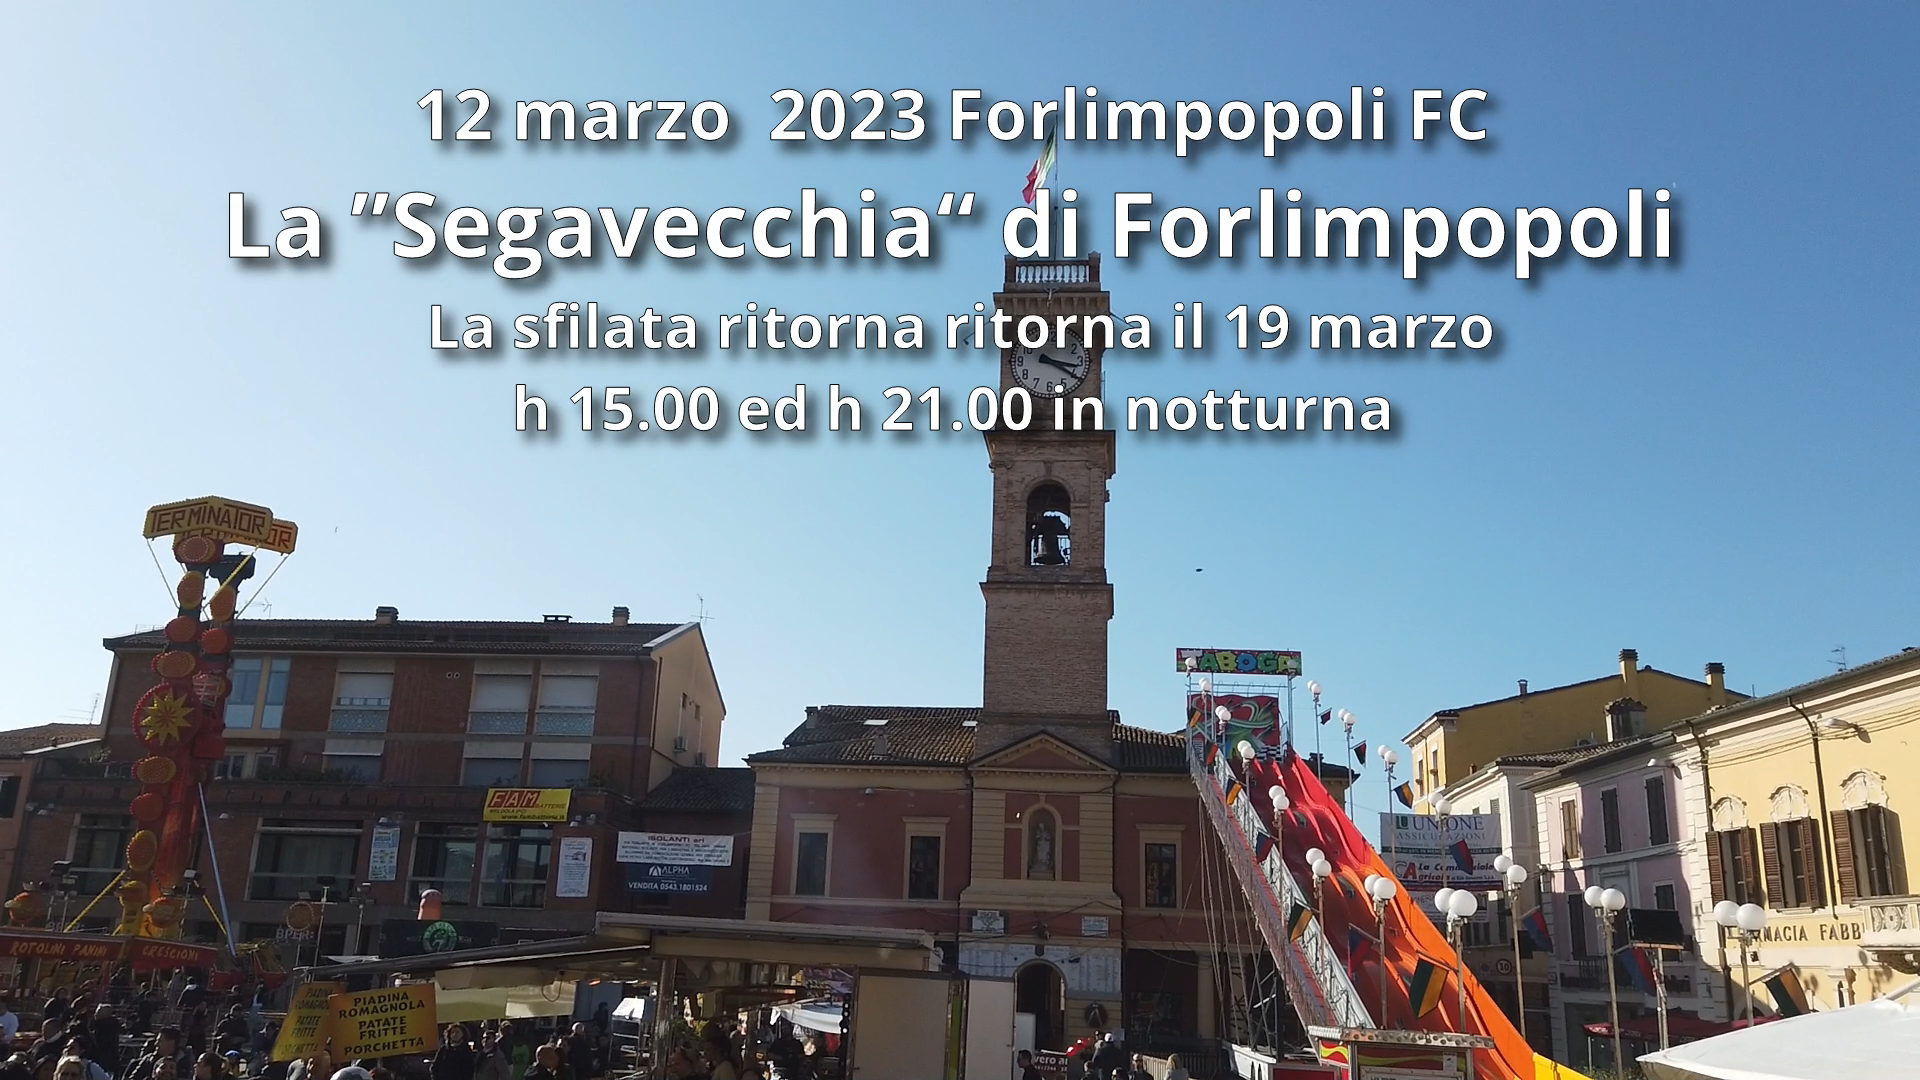 12 marzo 2023, Forlimpopoli (FC): La “Segavecchia di Forlimpopoli”